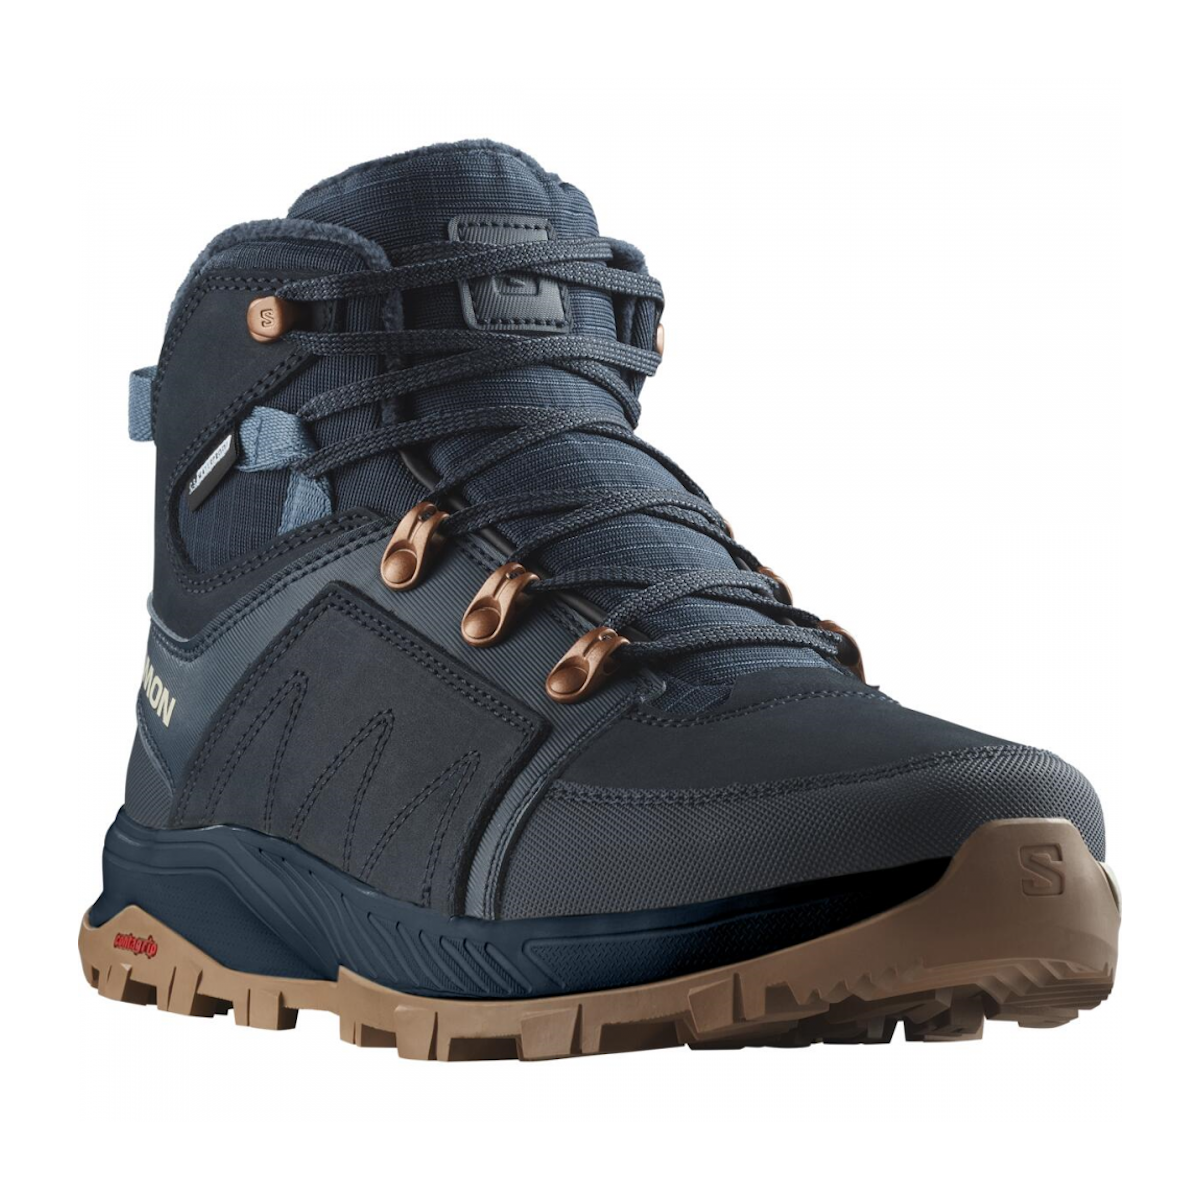 SALOMON OUTCHILL TS CSWP W winter shoes - dark blue/brown